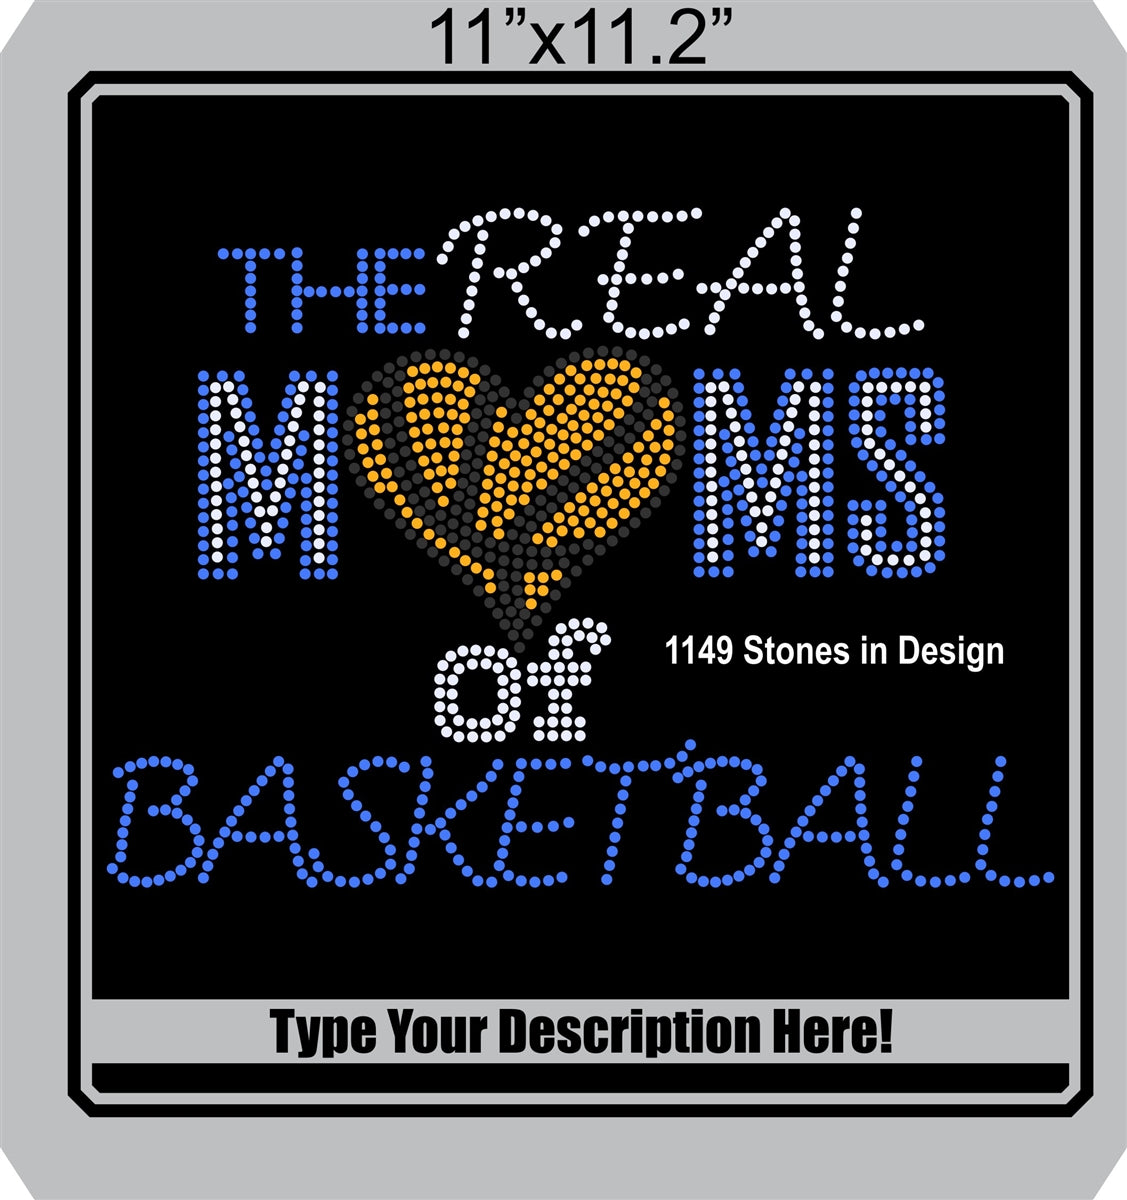 Real Moms of Baskeball Combo ,TTF Rhinestone Fonts & Rhinestone Designs